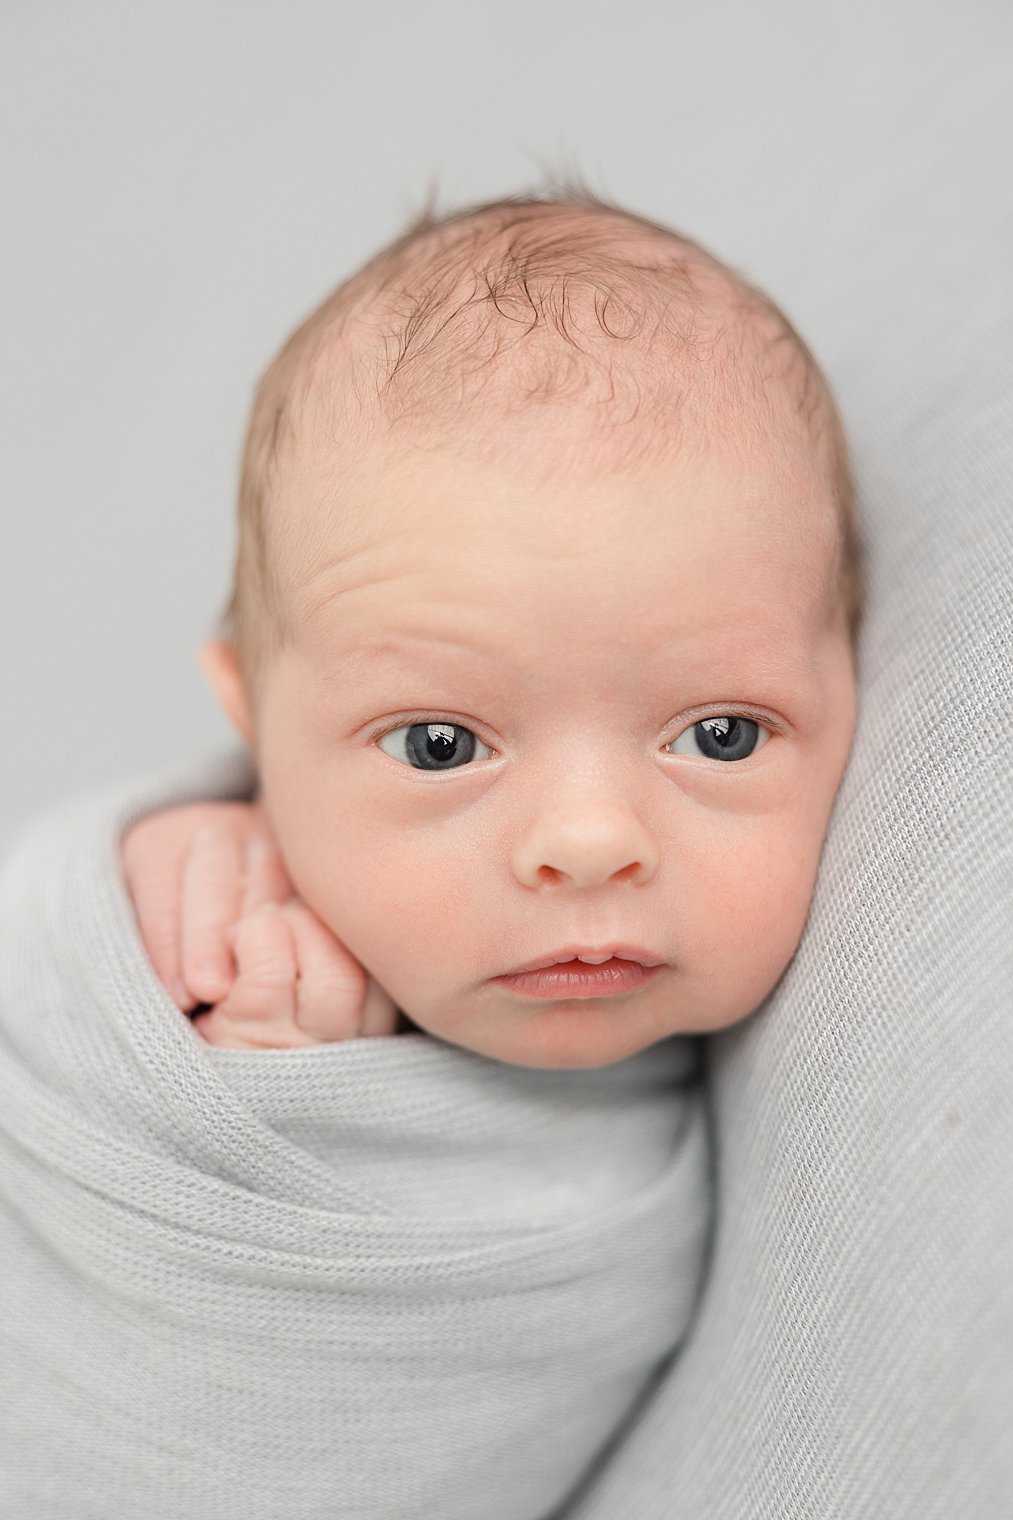 newborn boy with eyes open